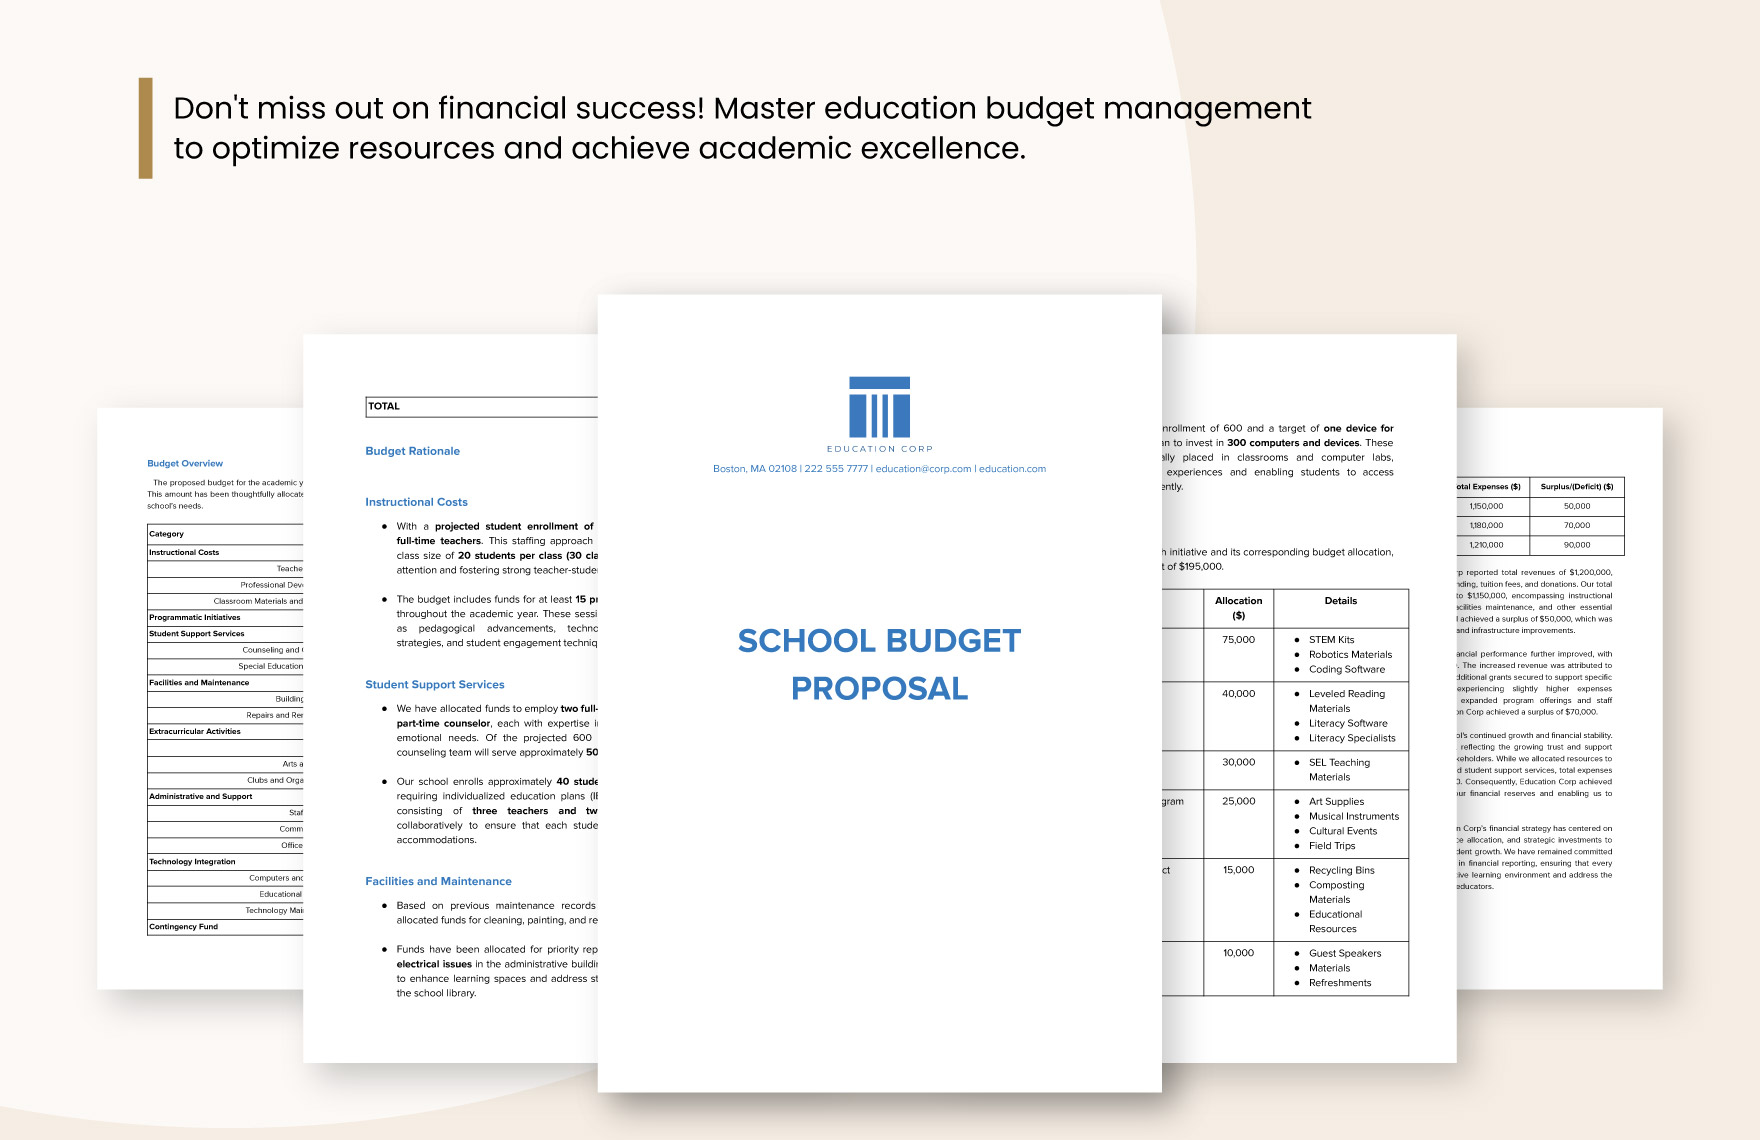 School Budget Proposal Template